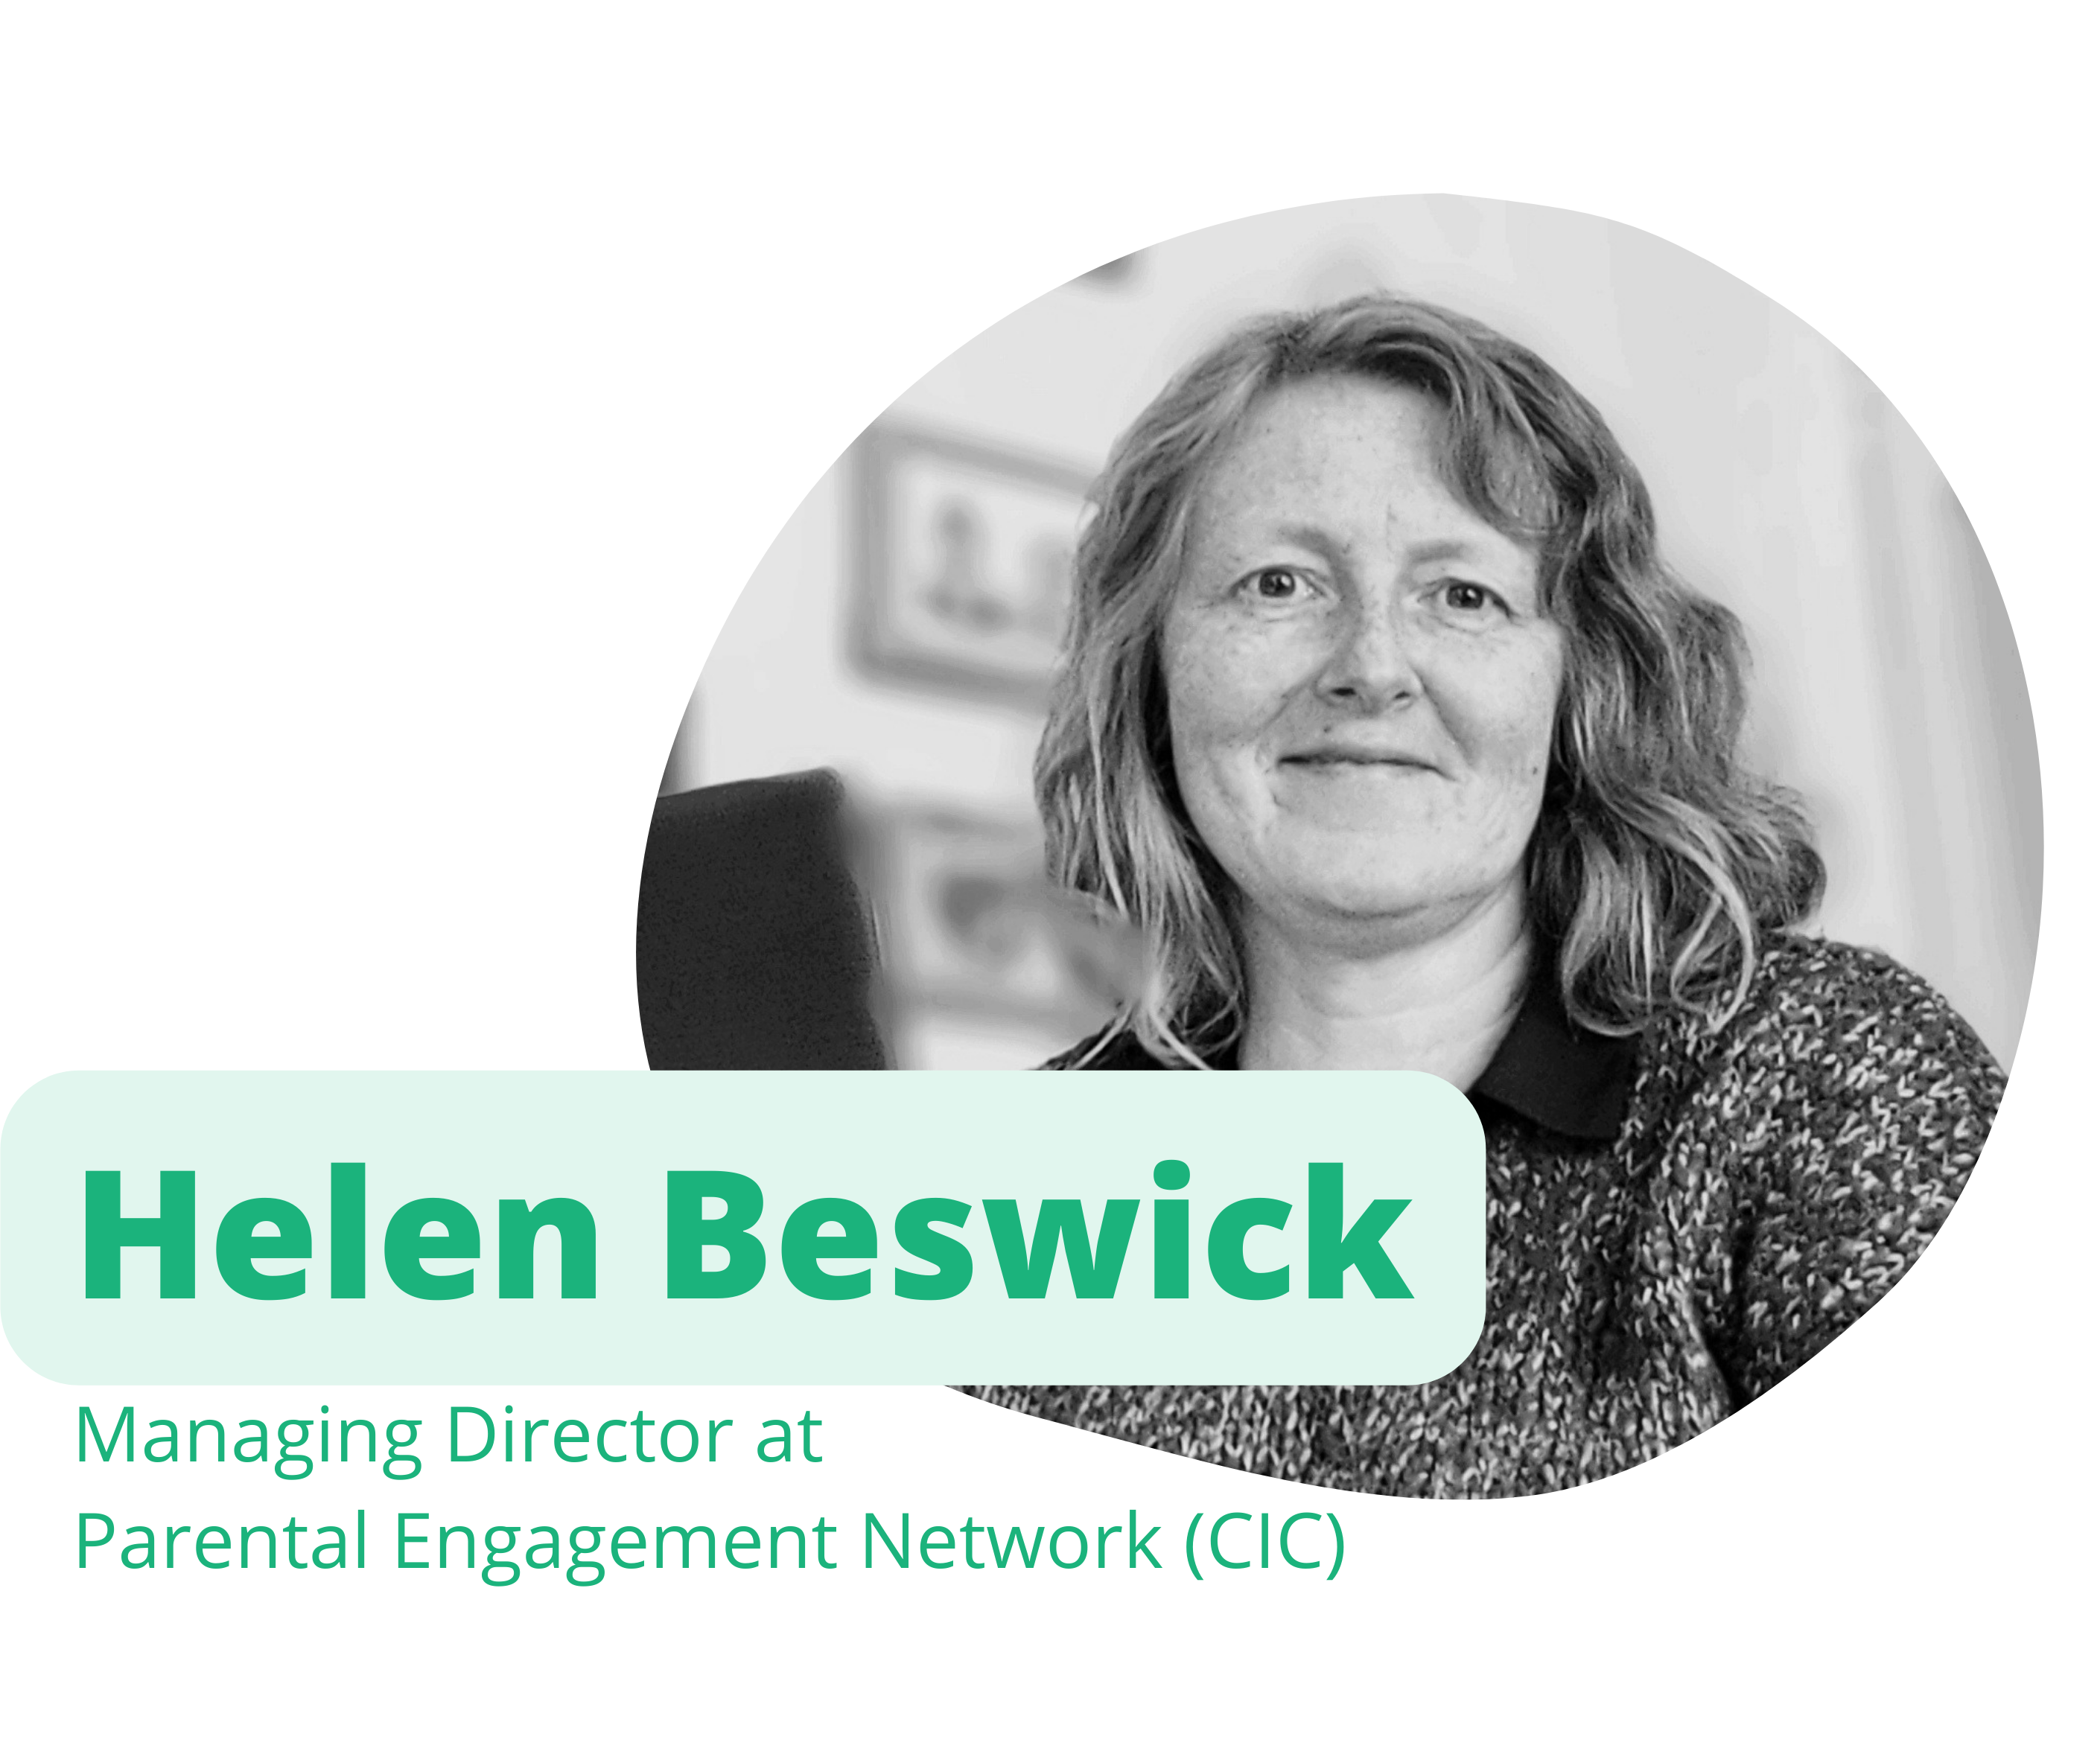 Parental Engagement Webinar speaker - Helen Beswick (Managing Director at Parental Engagement Network (CIC))